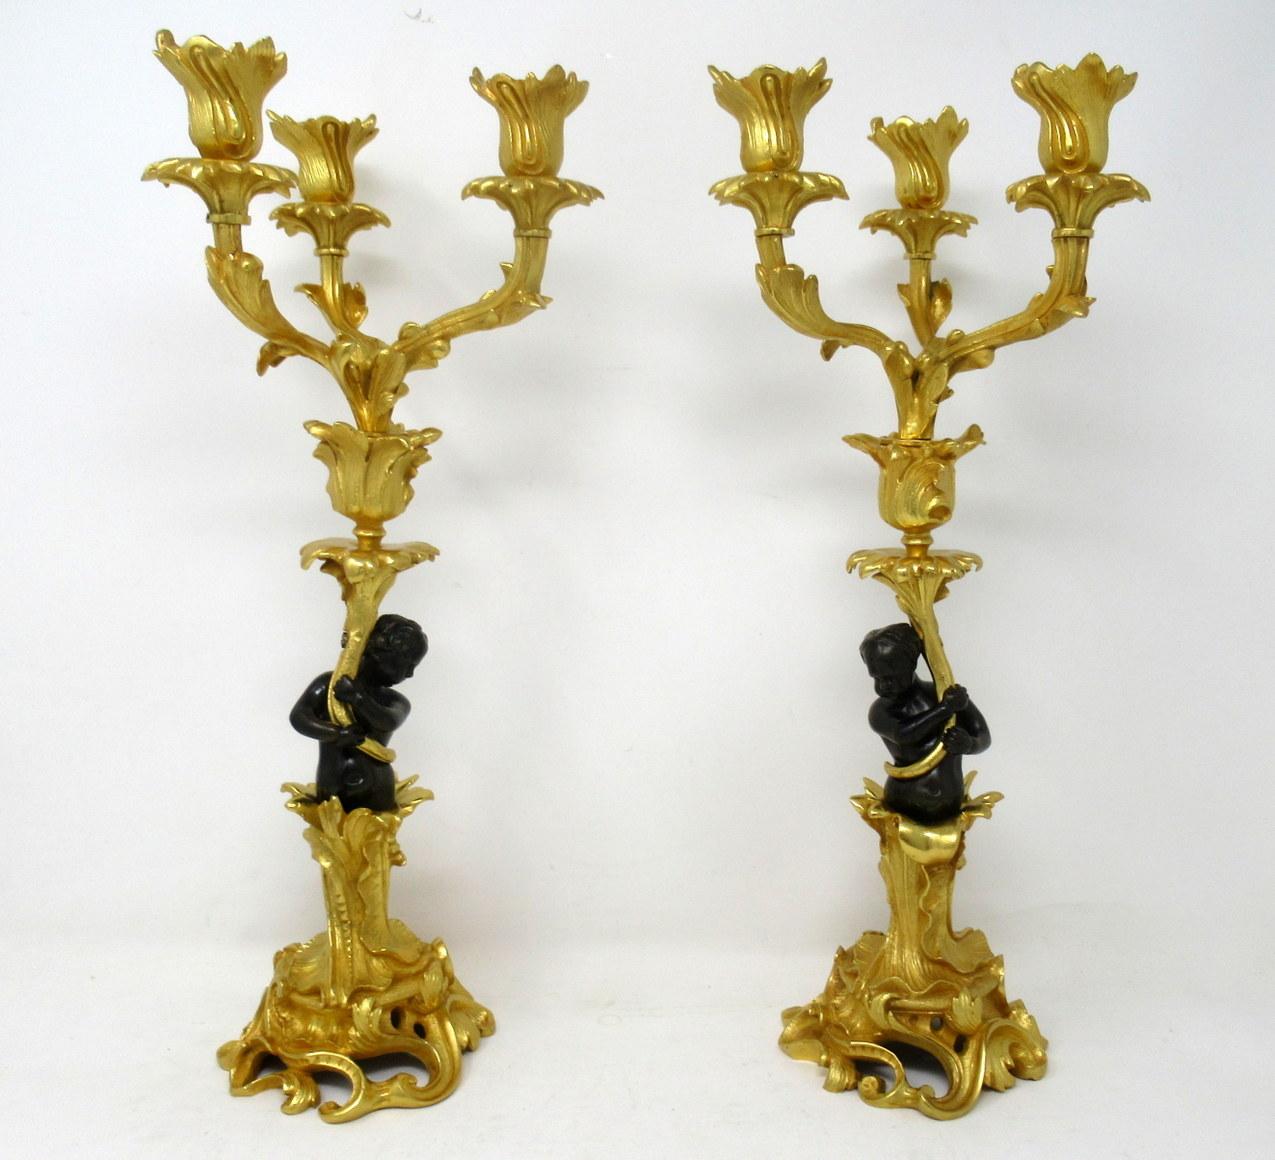 Grand Tour Antique Vintage Pair of French Ormolu Gilt Bronze Candelabra Candlesticks